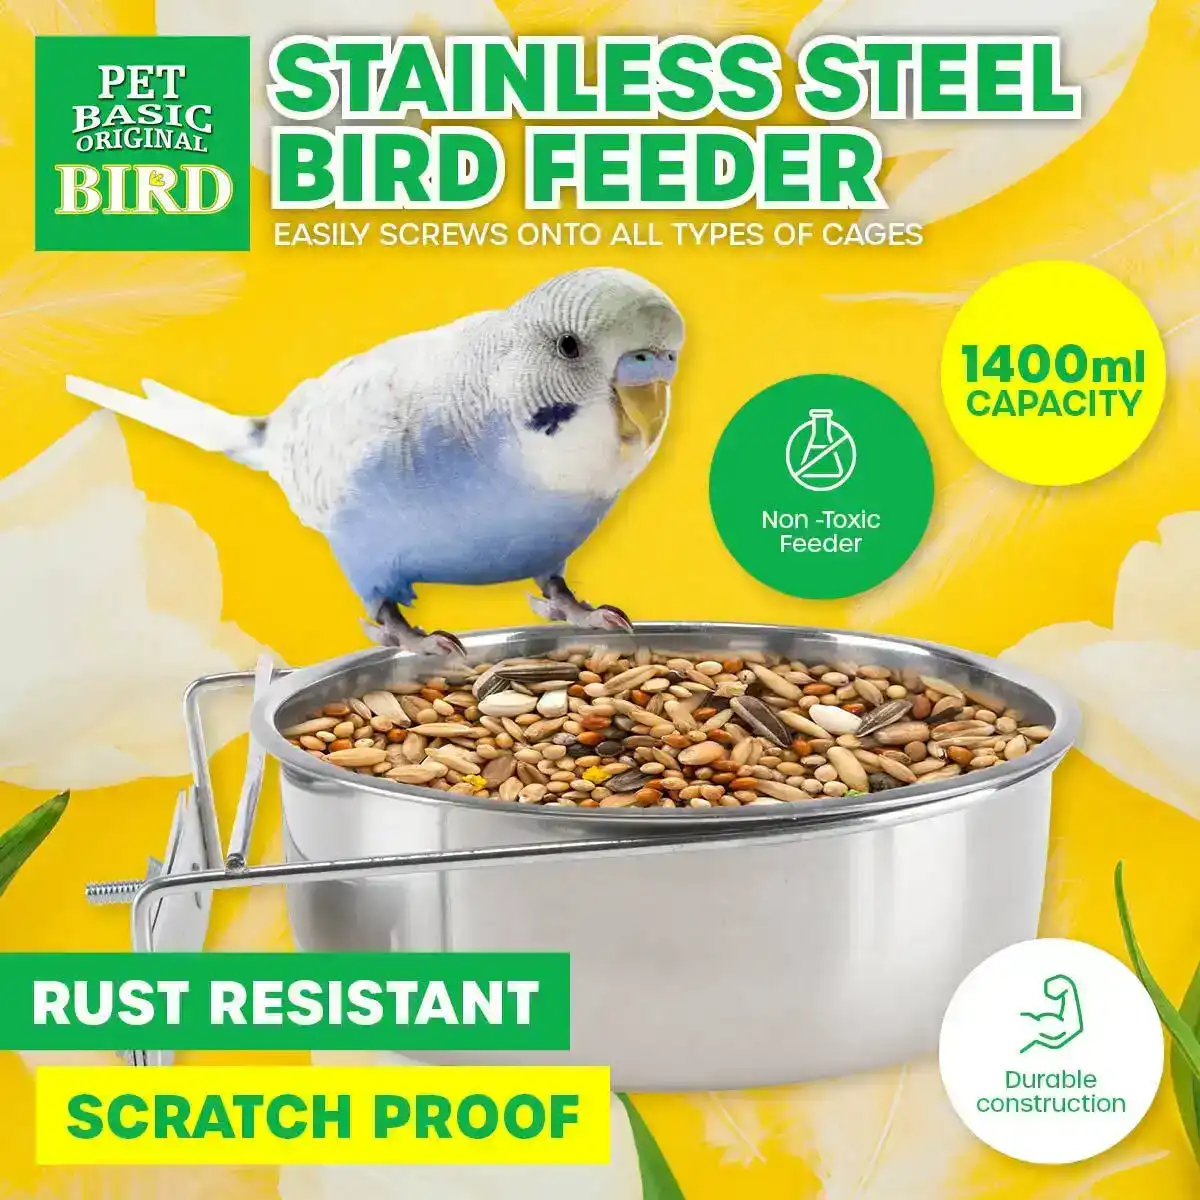 Pet Basic® Bird Feeder Stainless Steel Spill & Rust Proof Durable 1400ml